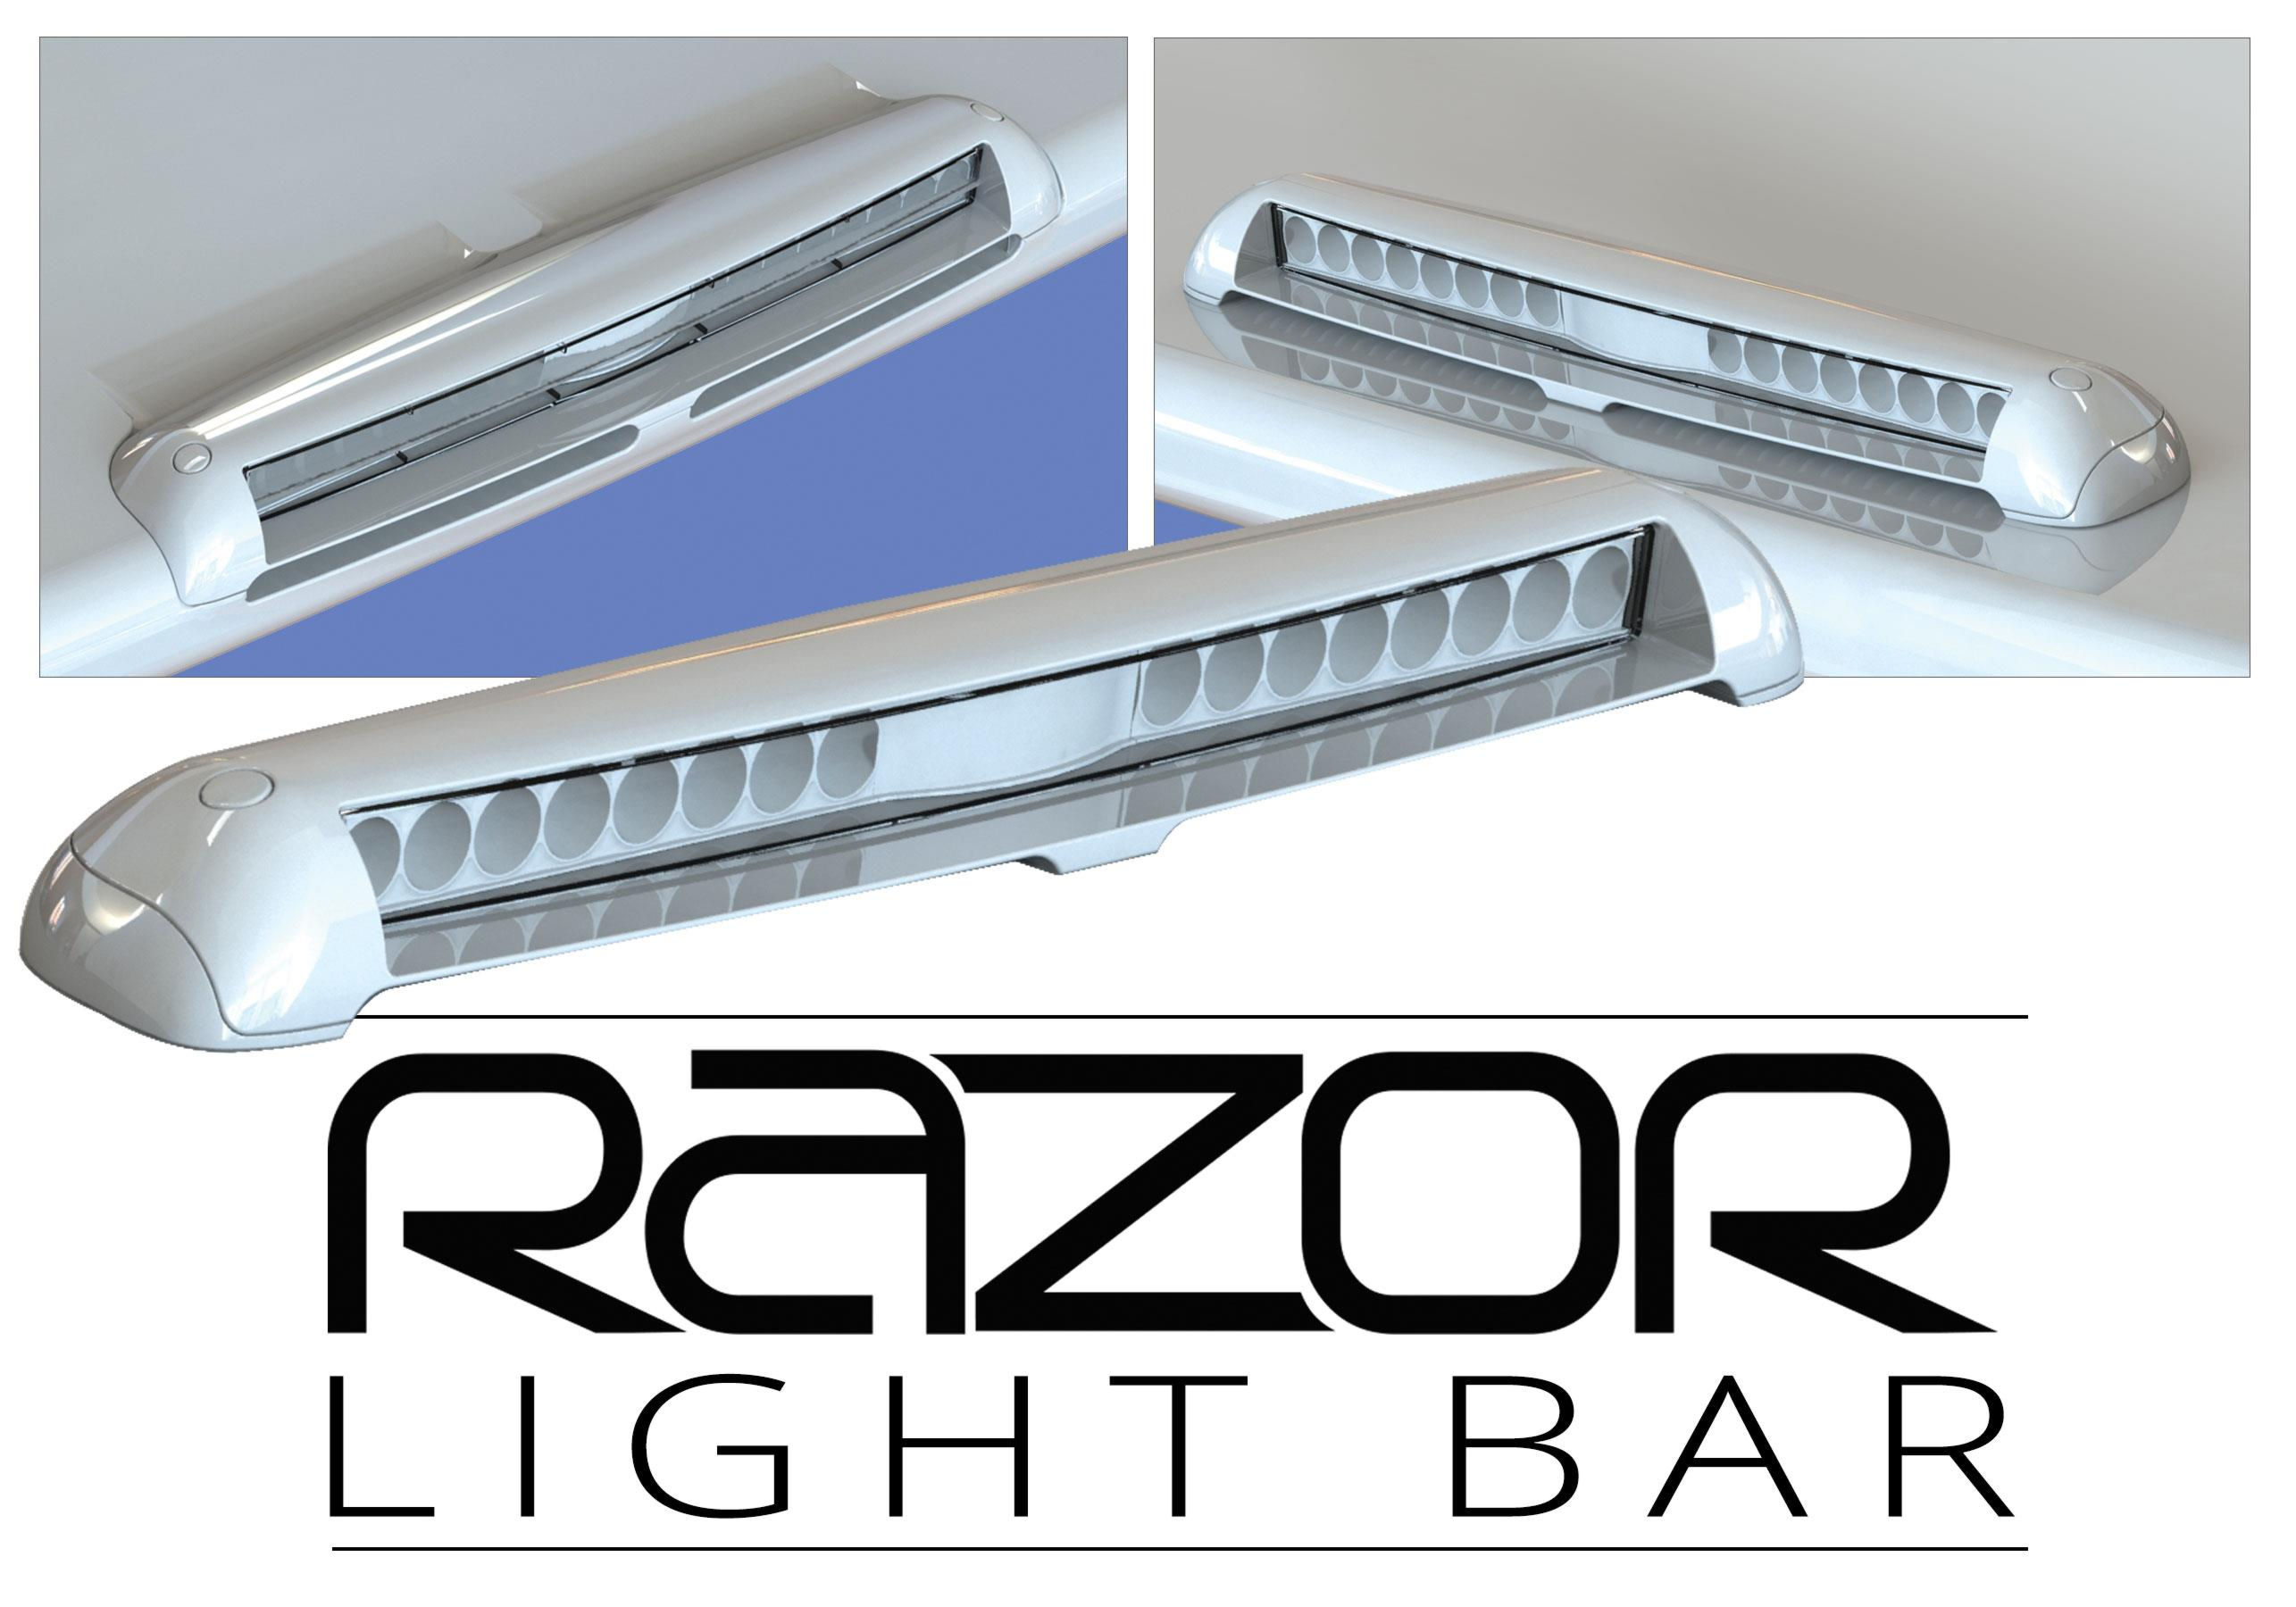 Lumitec Razor LED Light Bar - Designed for Marine Applications! Panbo